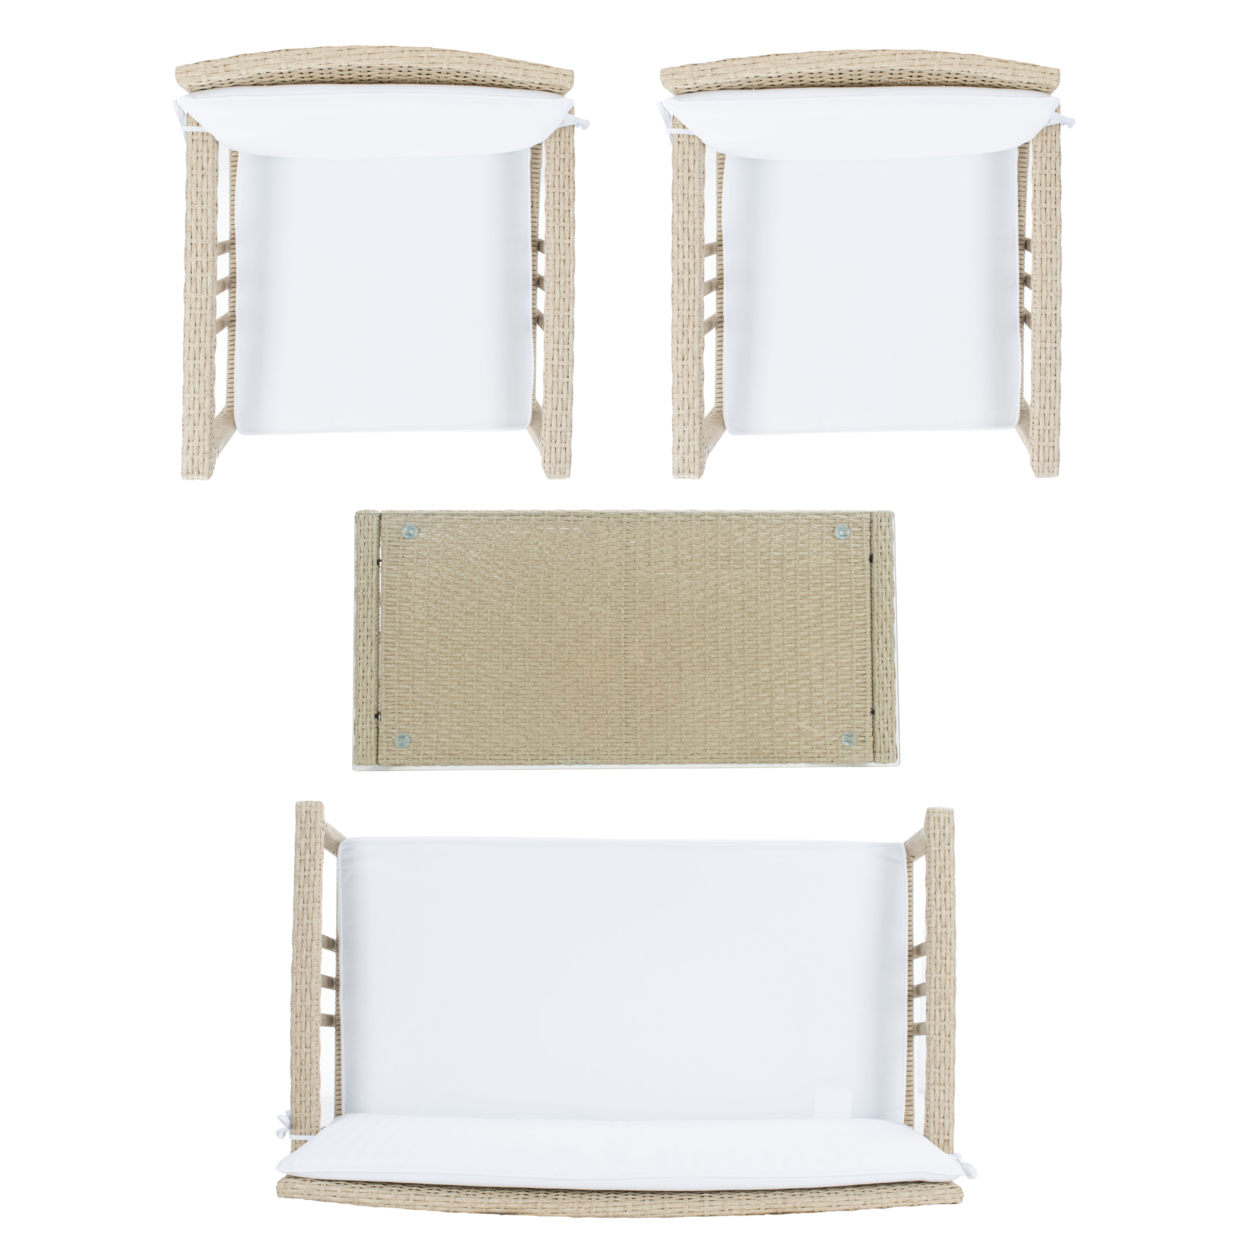 SAFAVIEH Outdoor Collection Reslor 4-Piece Patio Set Beige/White Cushion